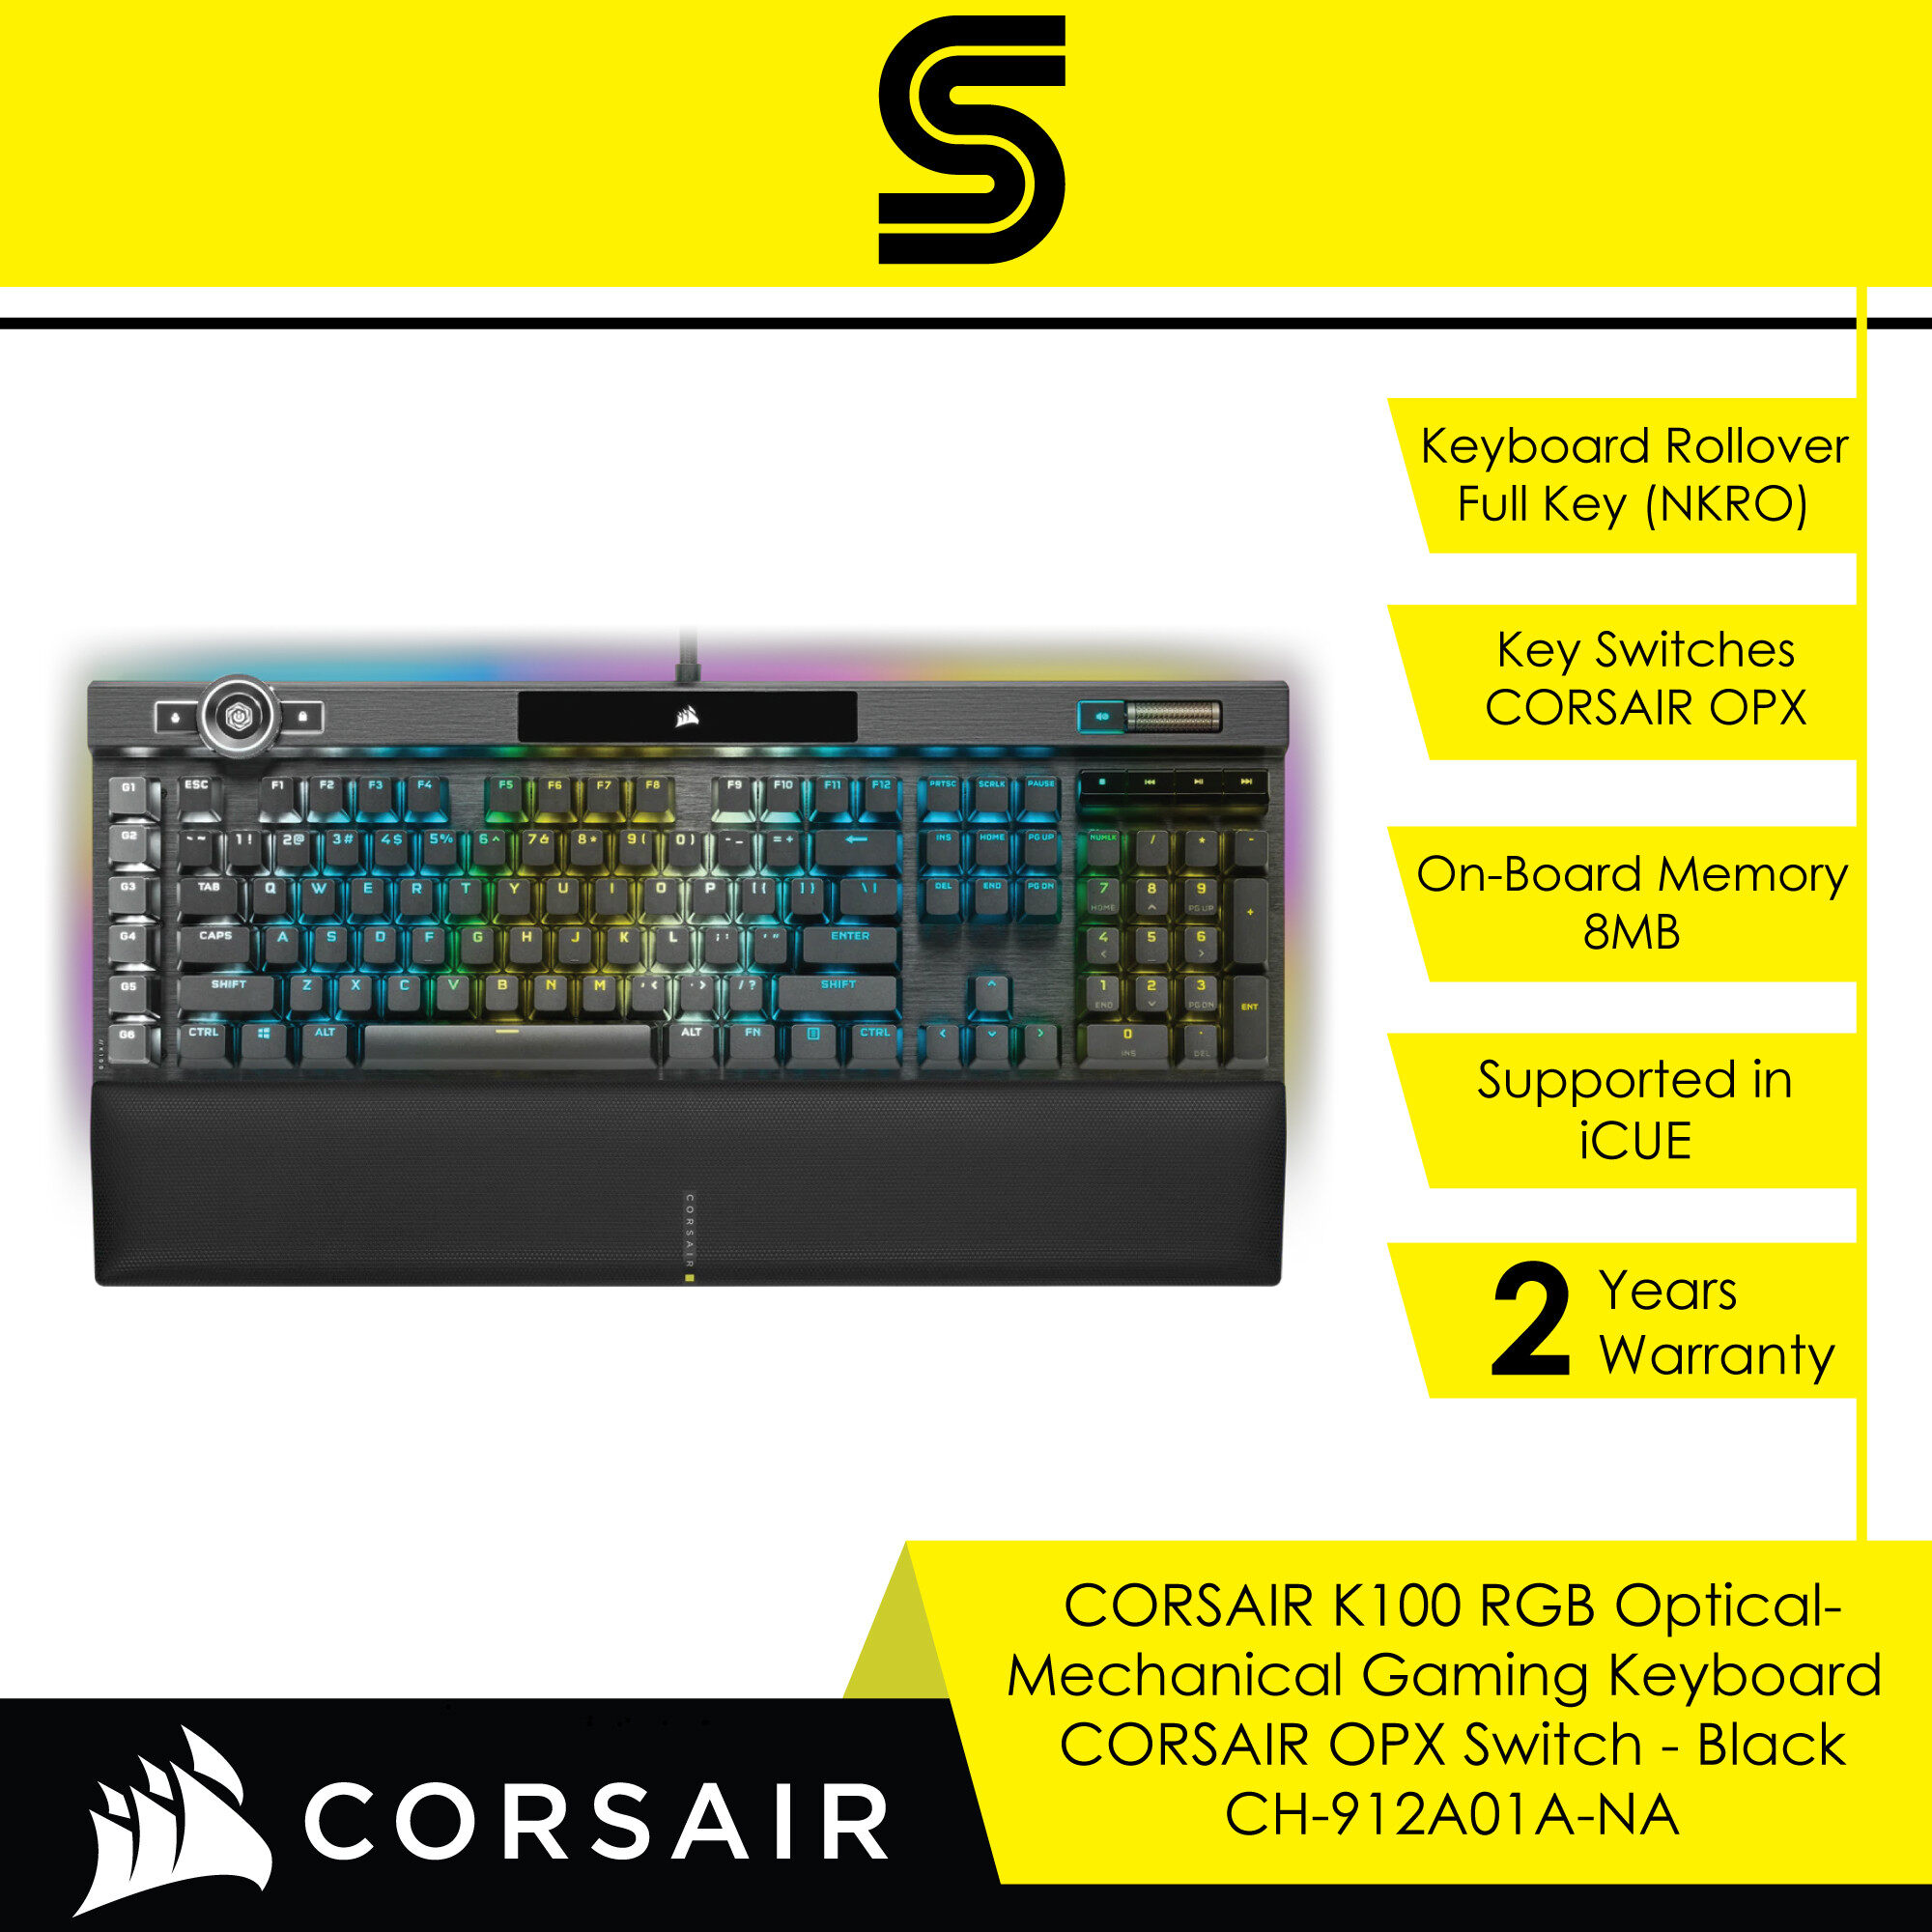 CORSAIR K100 RGB Optical-Mechanical Gaming Keyboard - CORSAIR OPX Switch - Black - CH-912A01A-NA